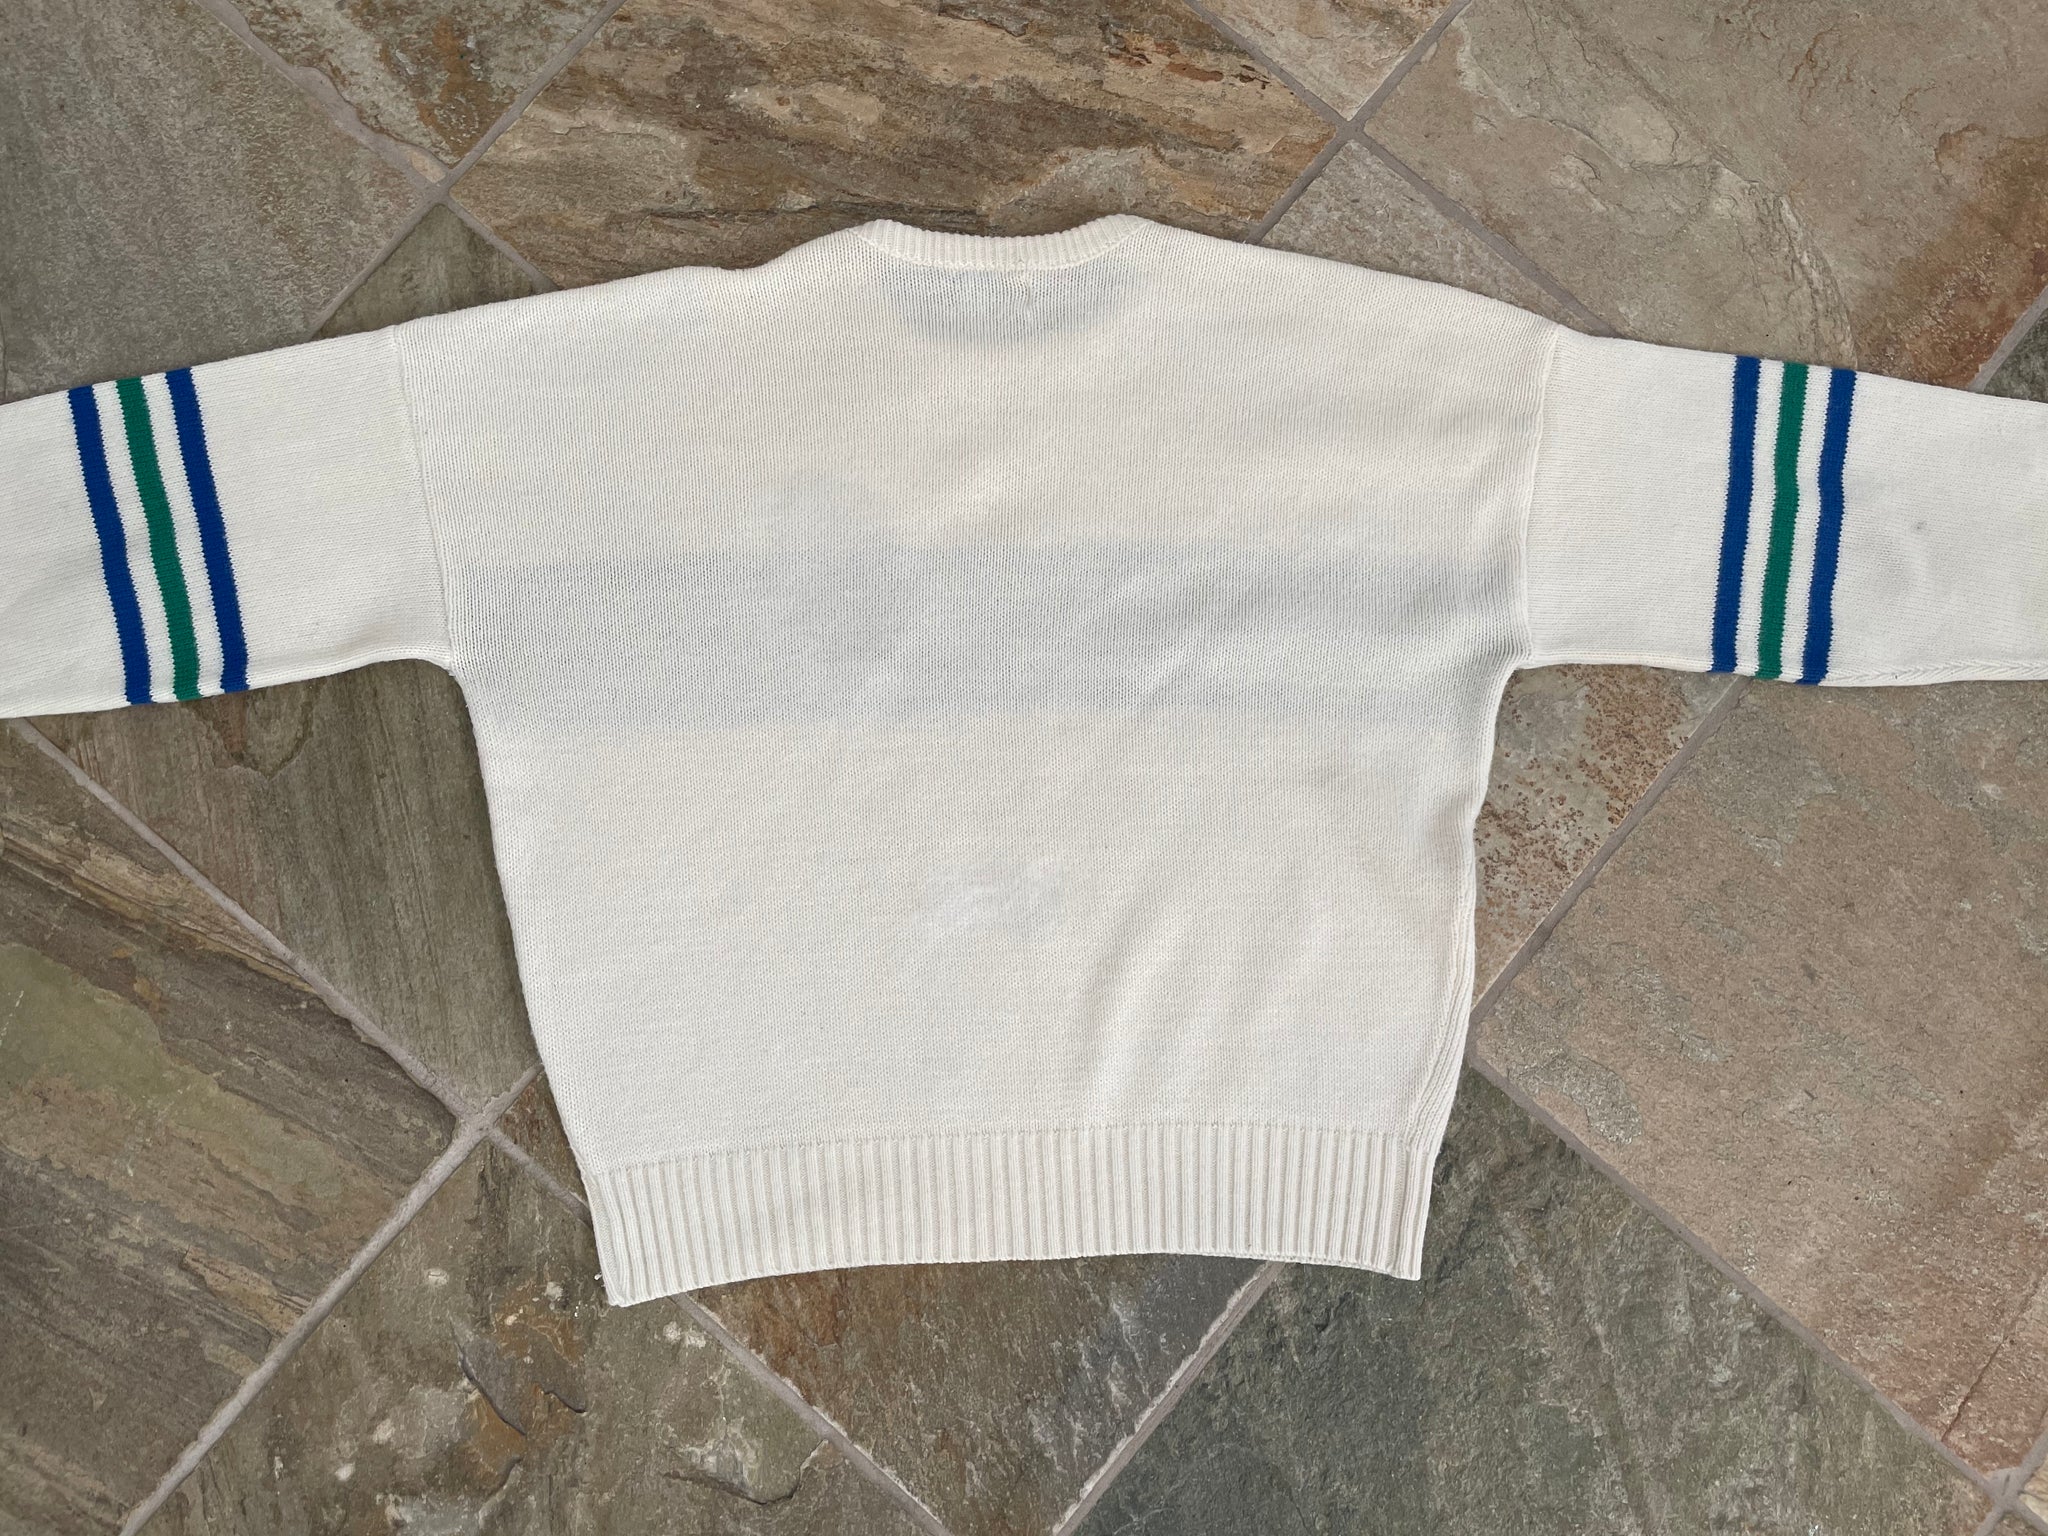 Vintage Boston Bruins Cliff Engle Sweater Hockey Sweatshirt, Size